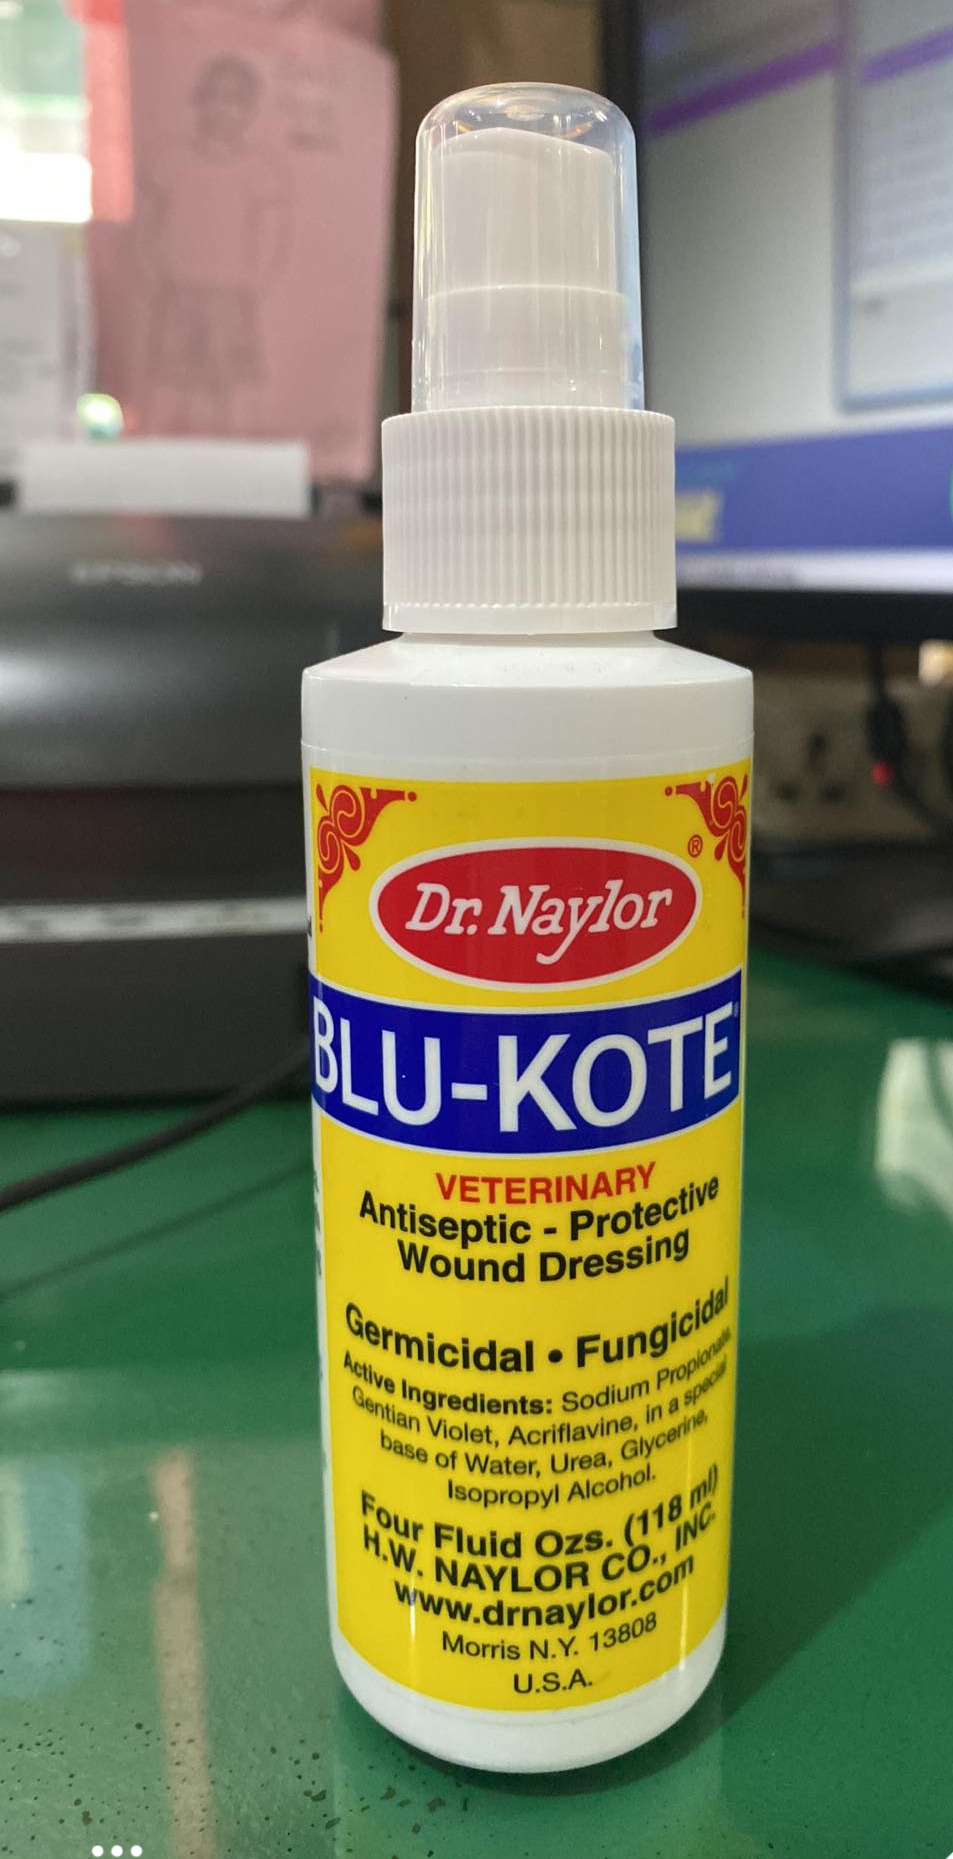 Dr. Naylor Blue Kote, For Veterinary